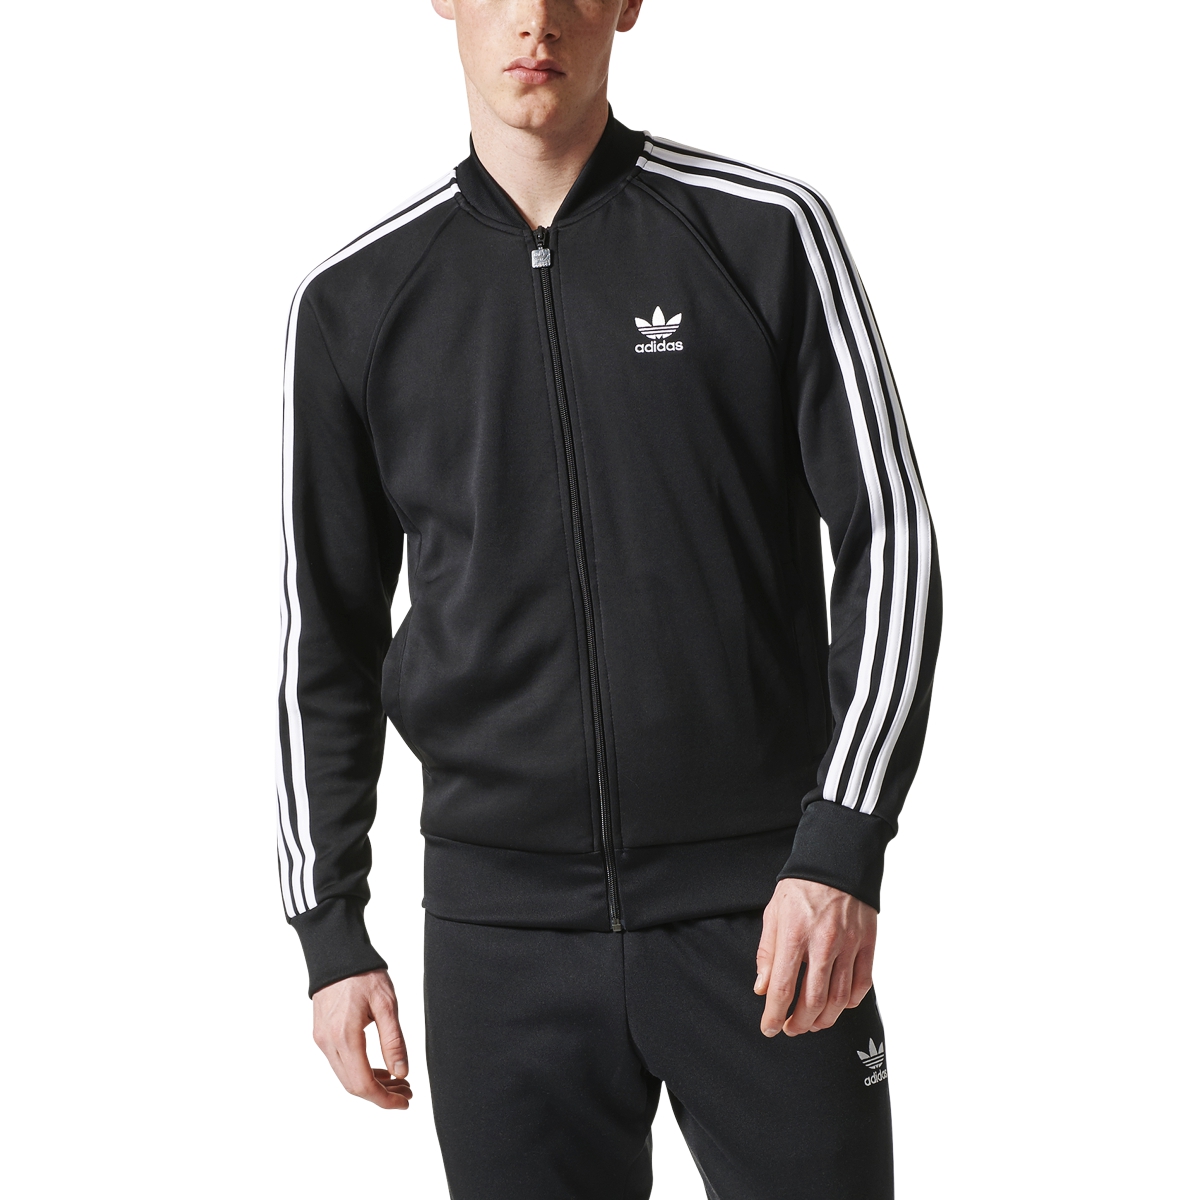 Adidas Originals Superstar Men's Track Jacket Black/White bk5921 | eBay